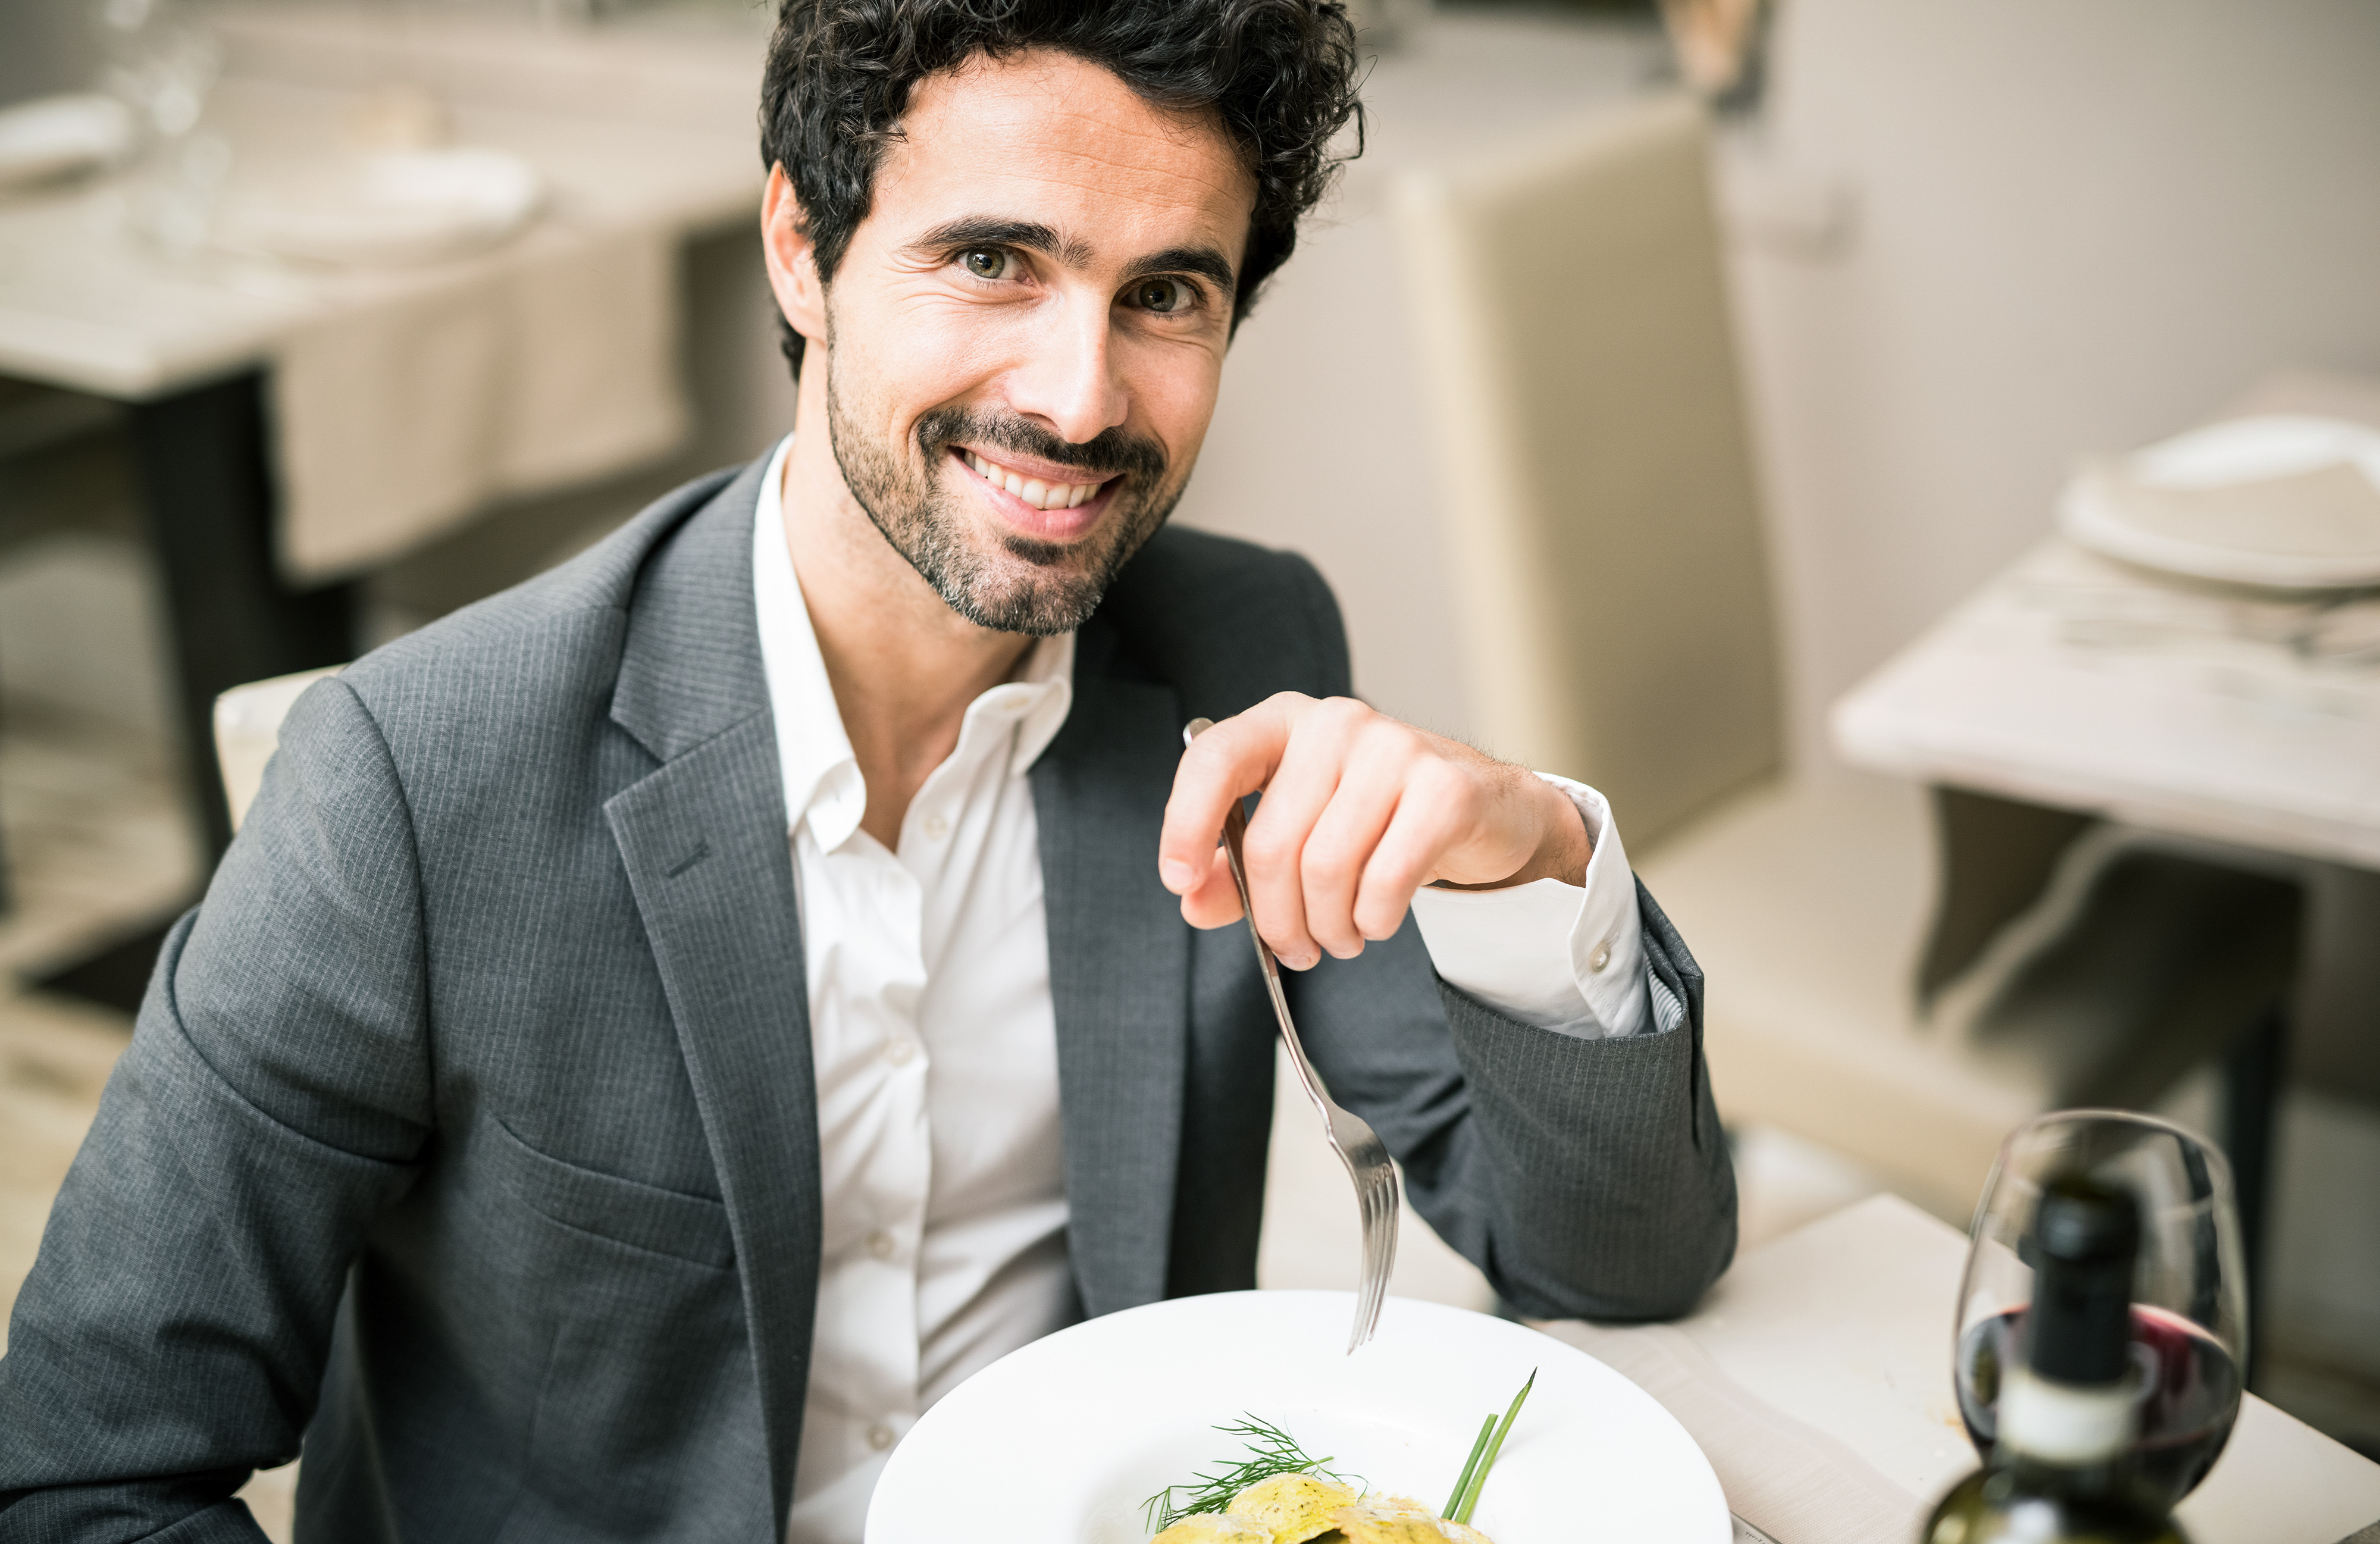 Man having lunch in a restaurant | Source: Shutterstock